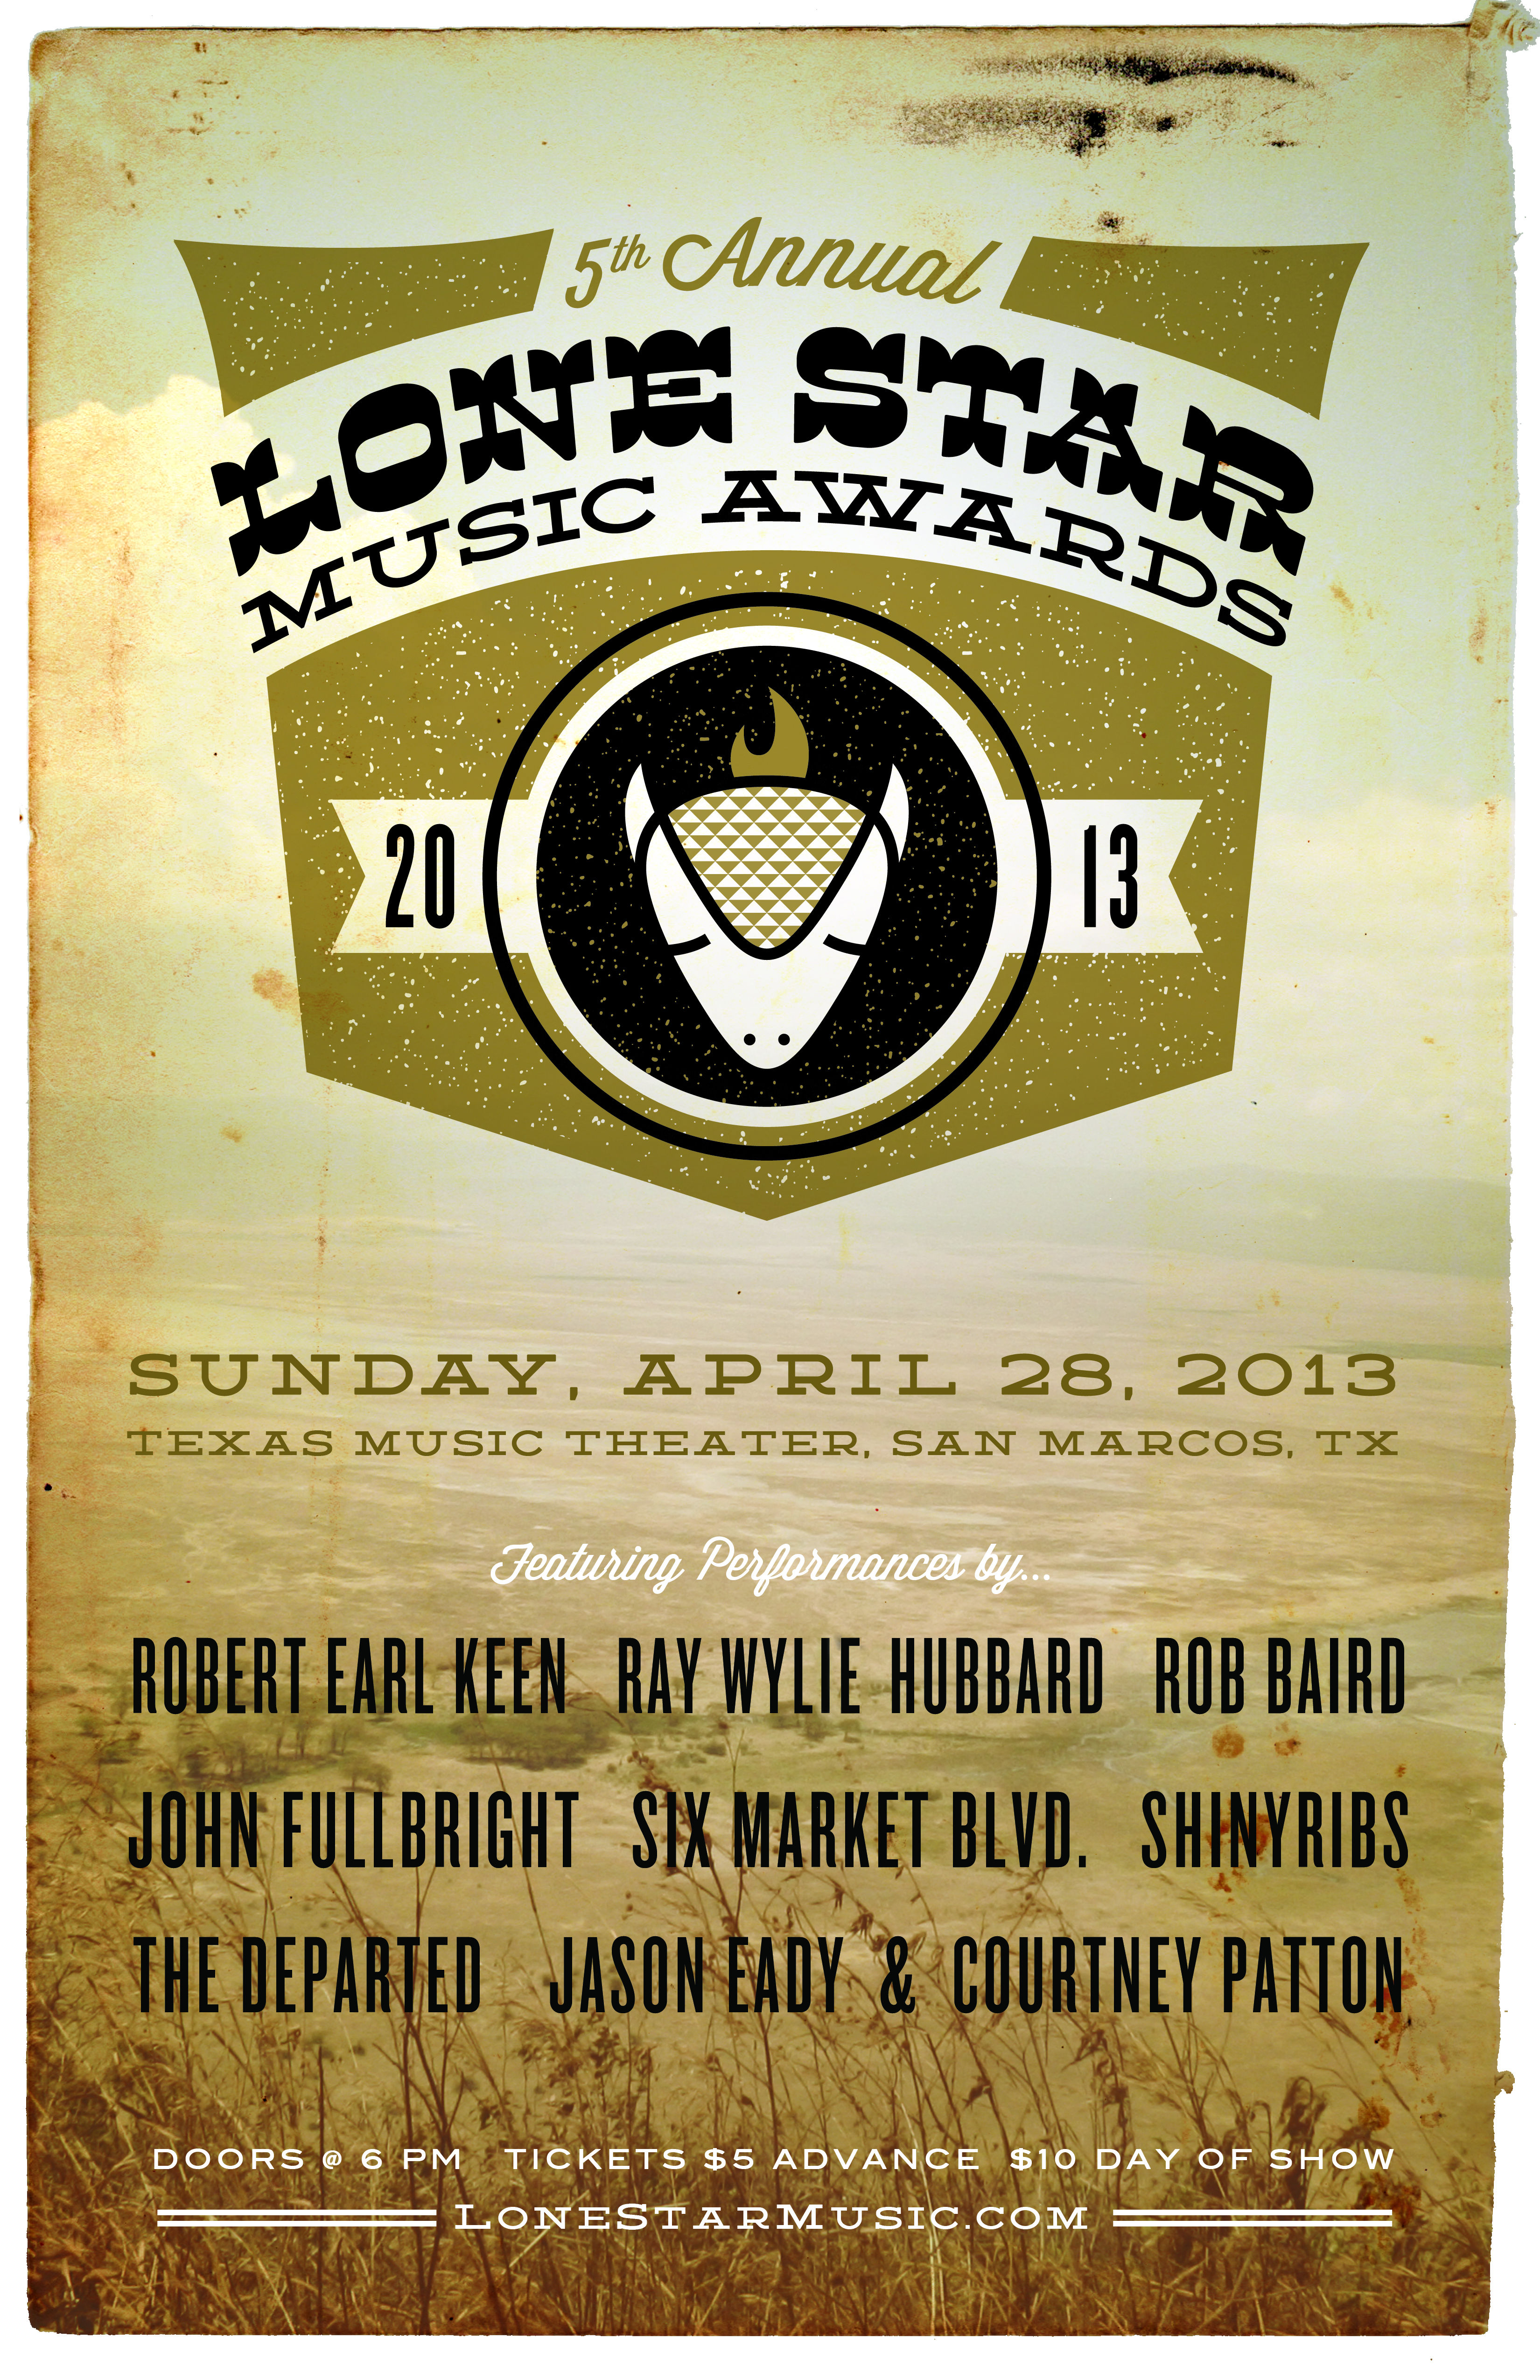 2013 LSM Awards Poster 